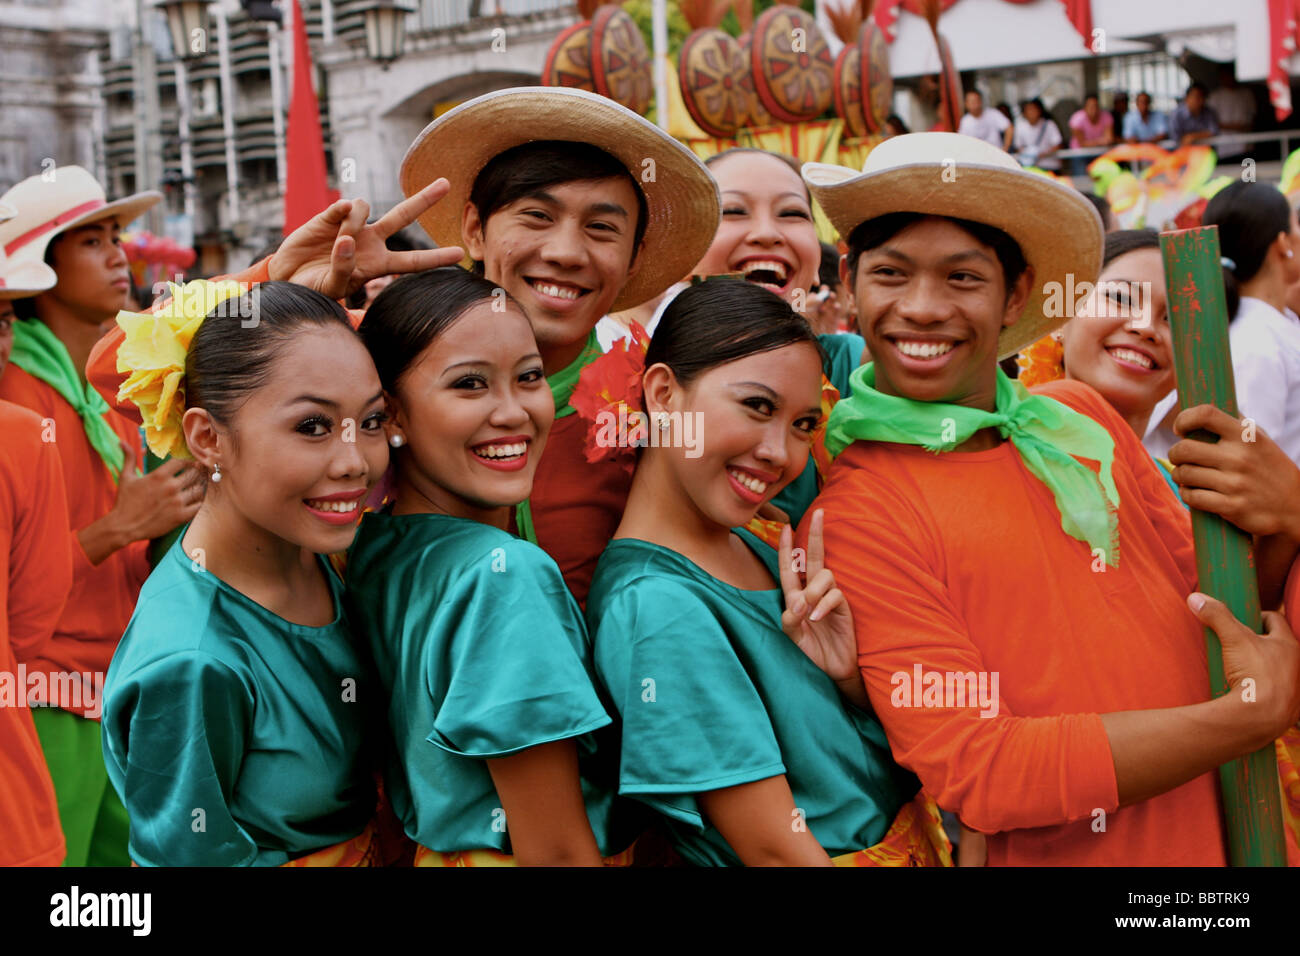 filipinos with sinulog costume on the sinulog festival Stock Photo